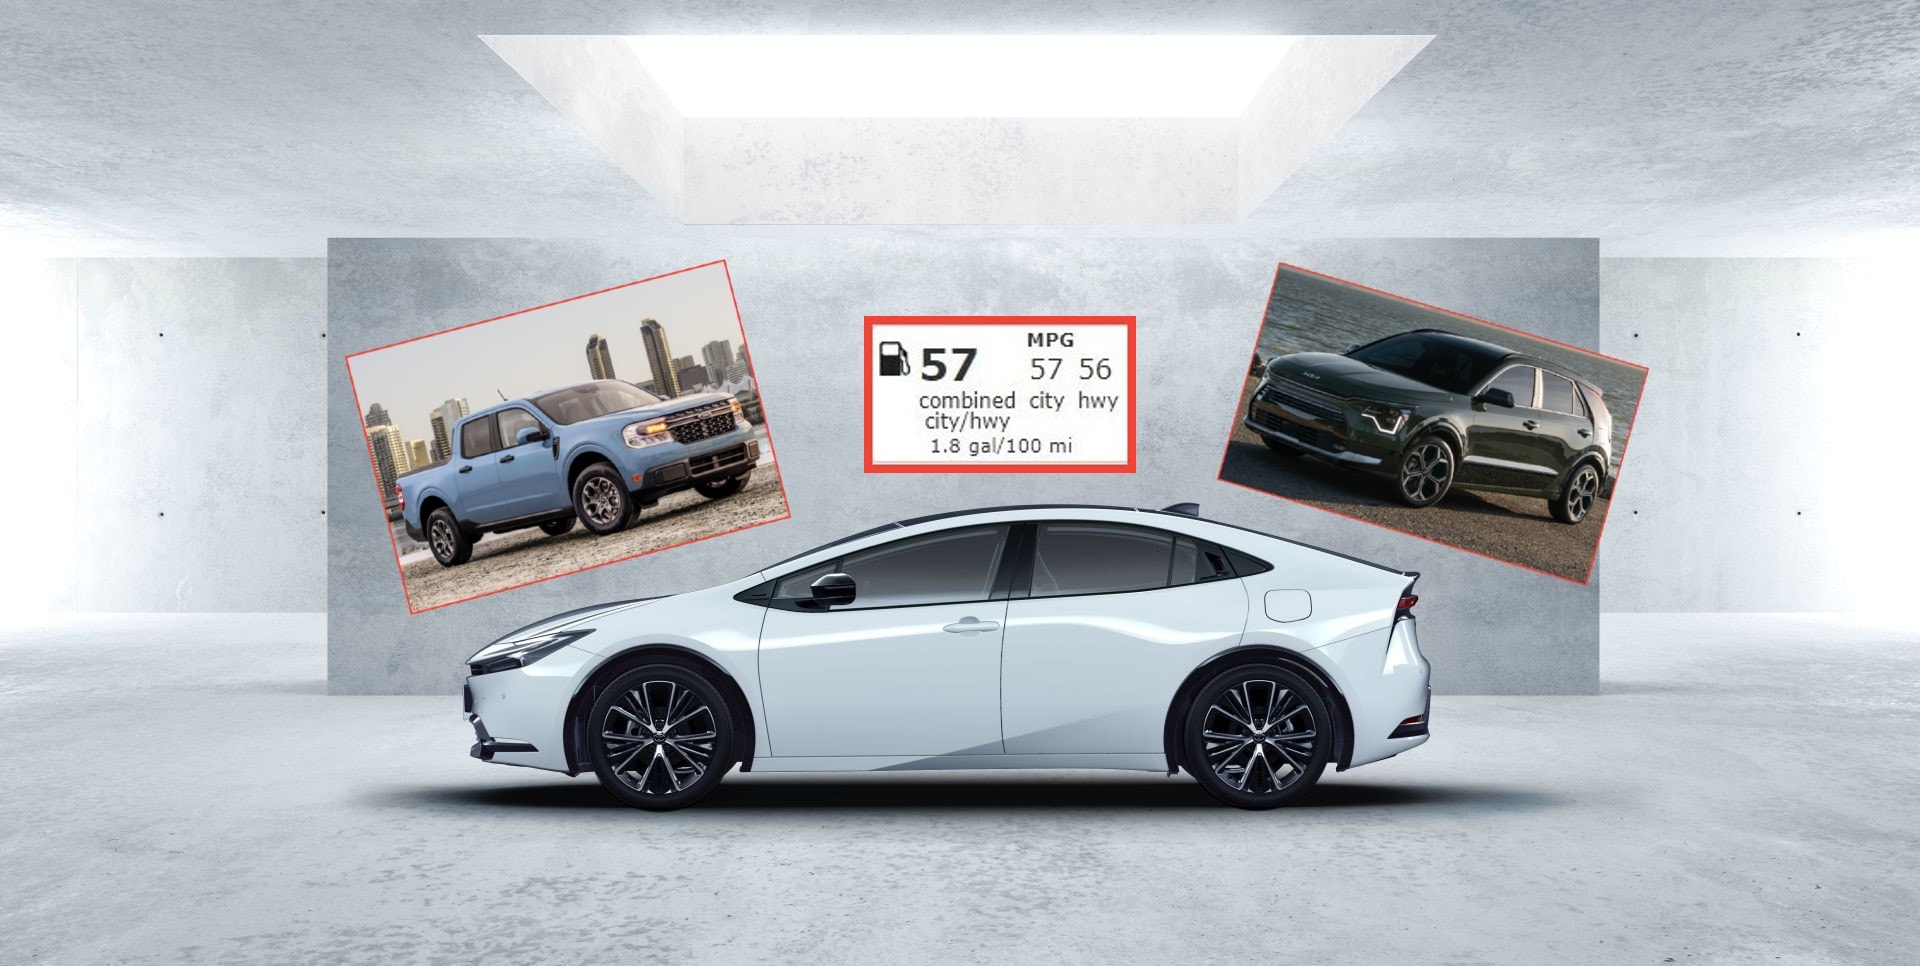 Fourth-generation Toyota Prius still reigns supreme